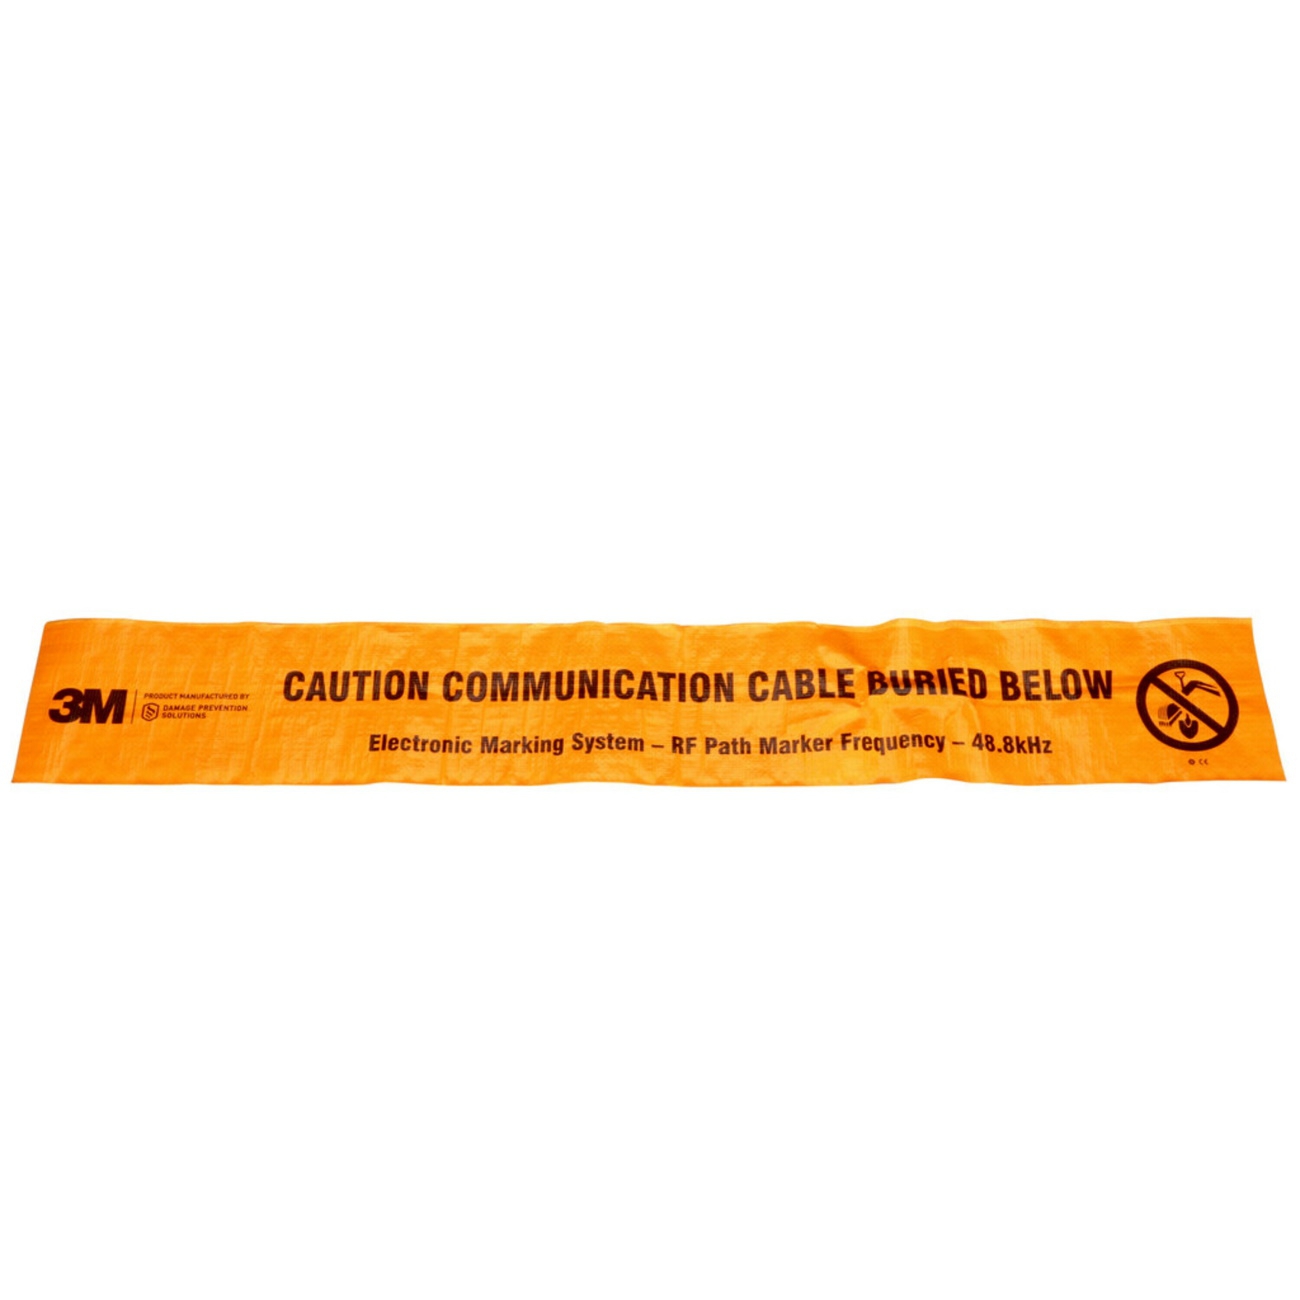 3M Elektronisch markeringssysteem (EMS) waarschuwingsband 7901, oranje, 152 mm, Telco, 152 m, 1 verpakkingseenheid